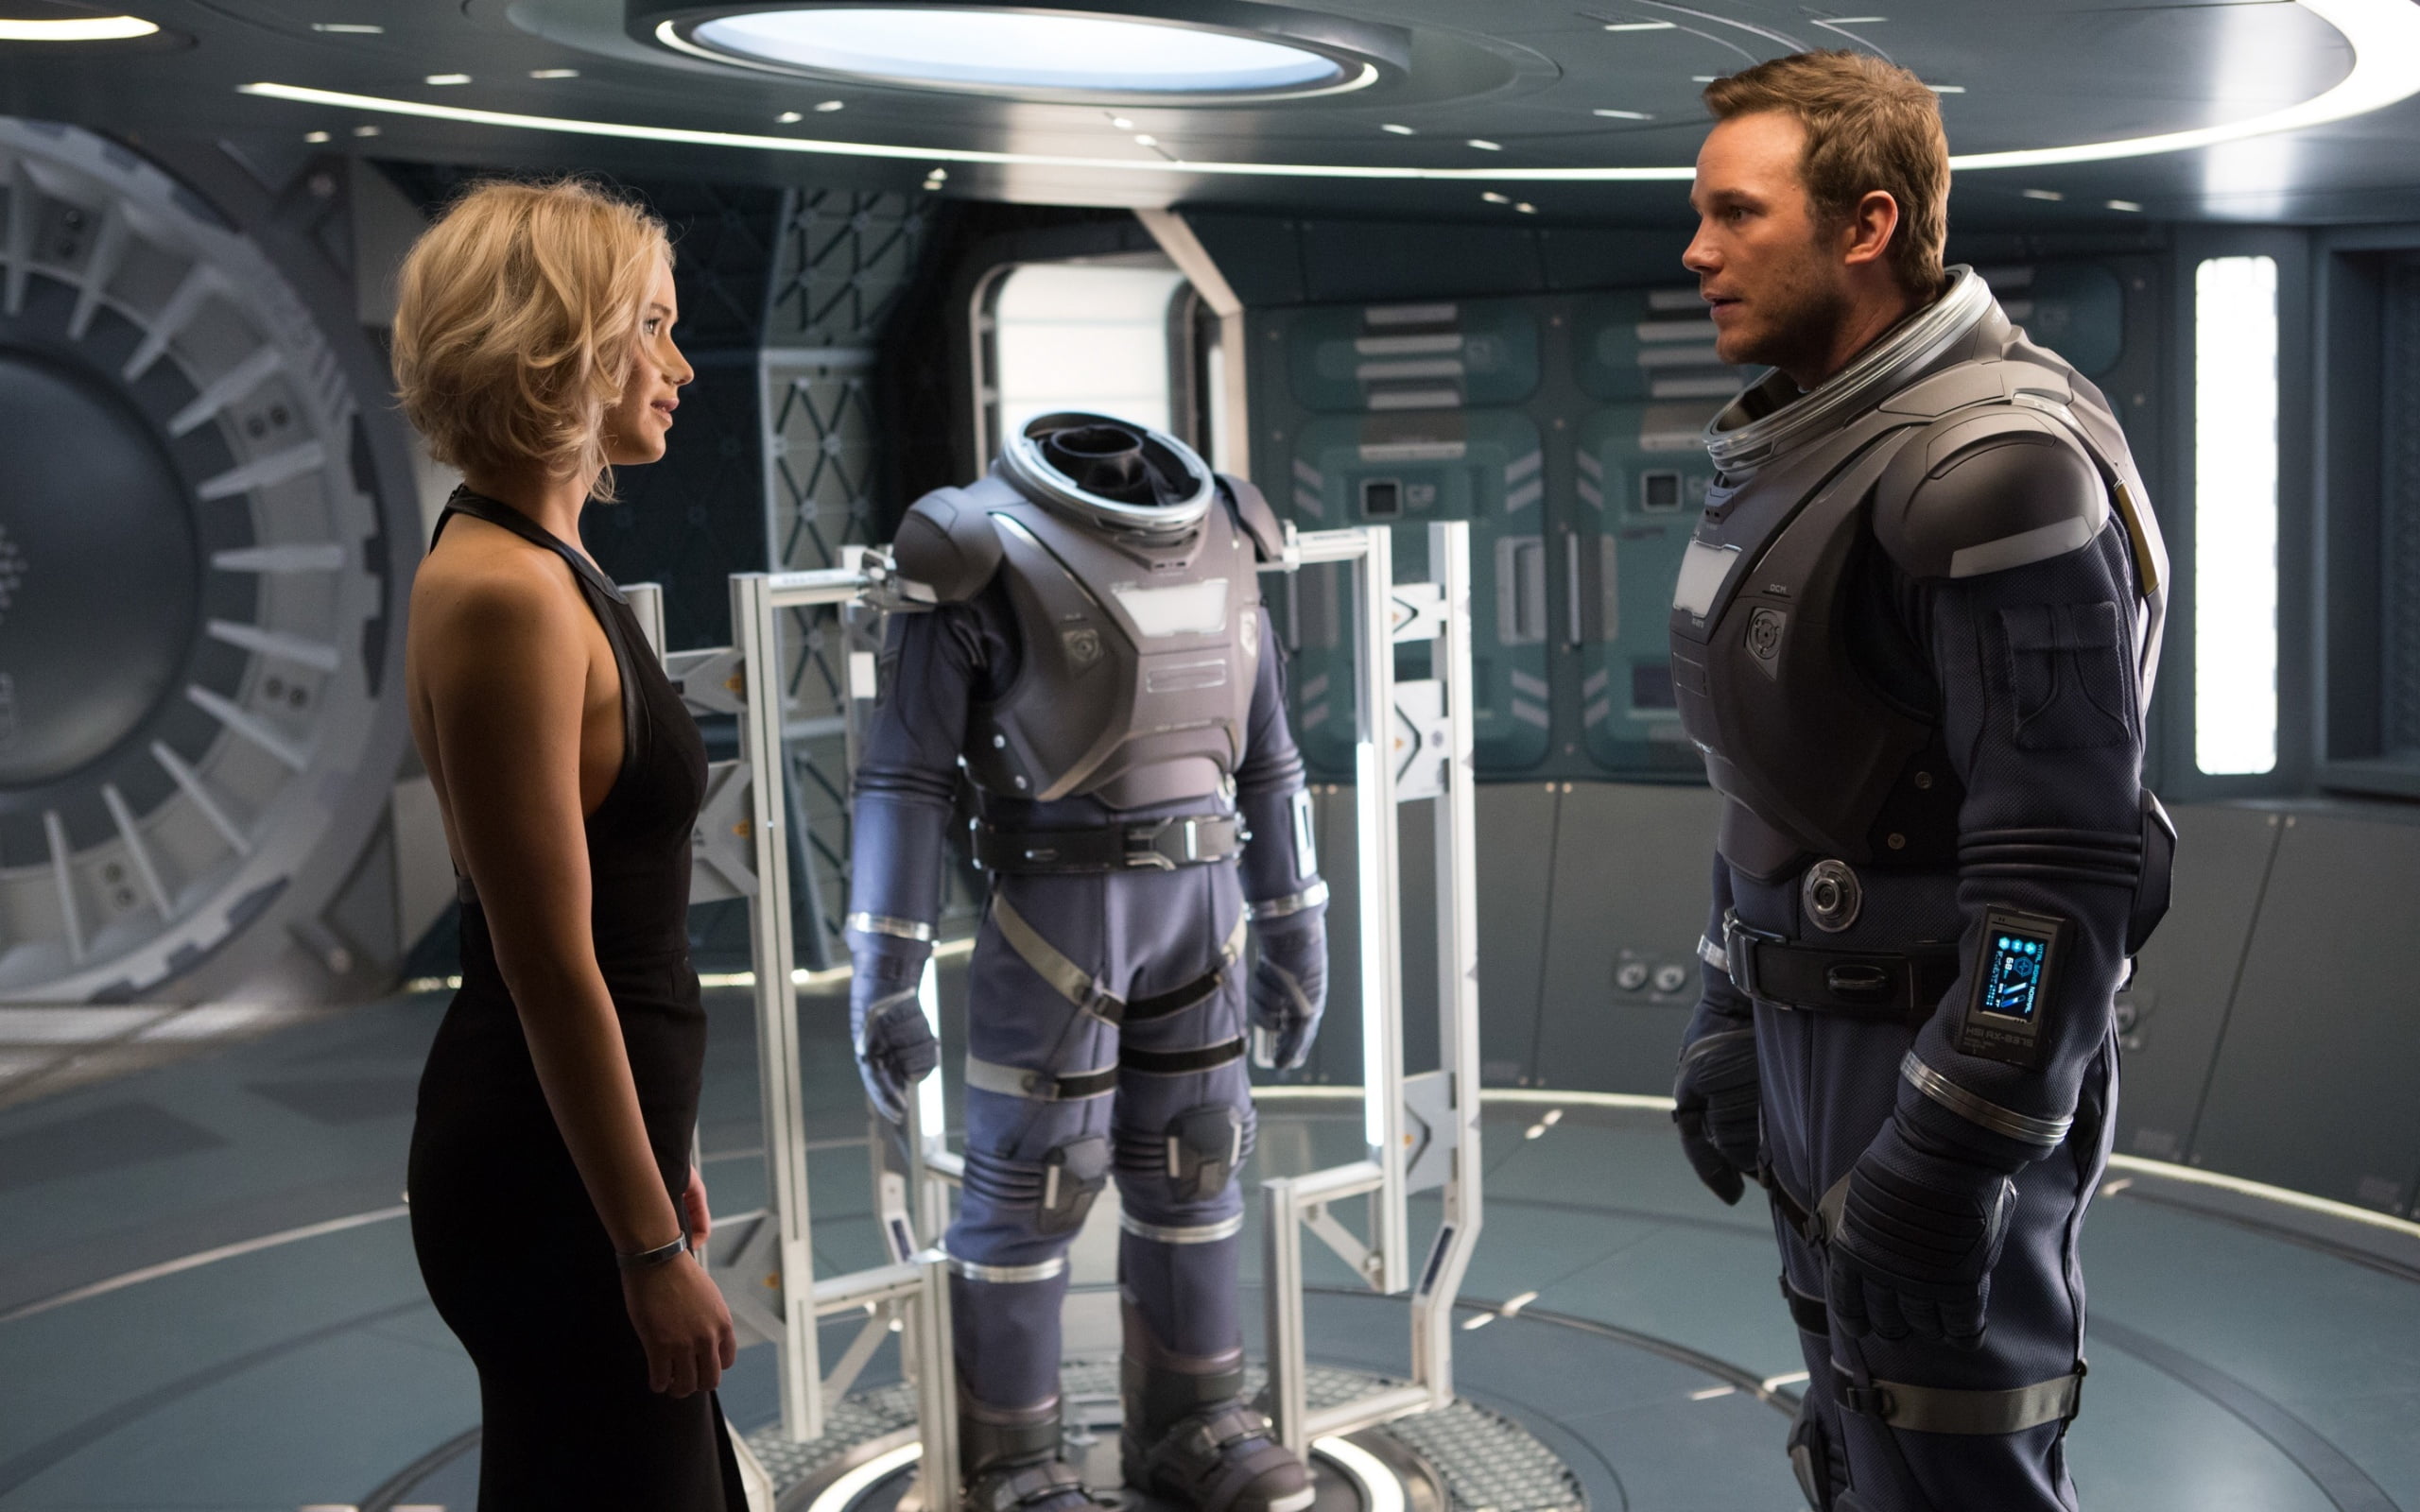 Jennifer Lawrence And Chris Pratt In, Passengers movie still screenshot